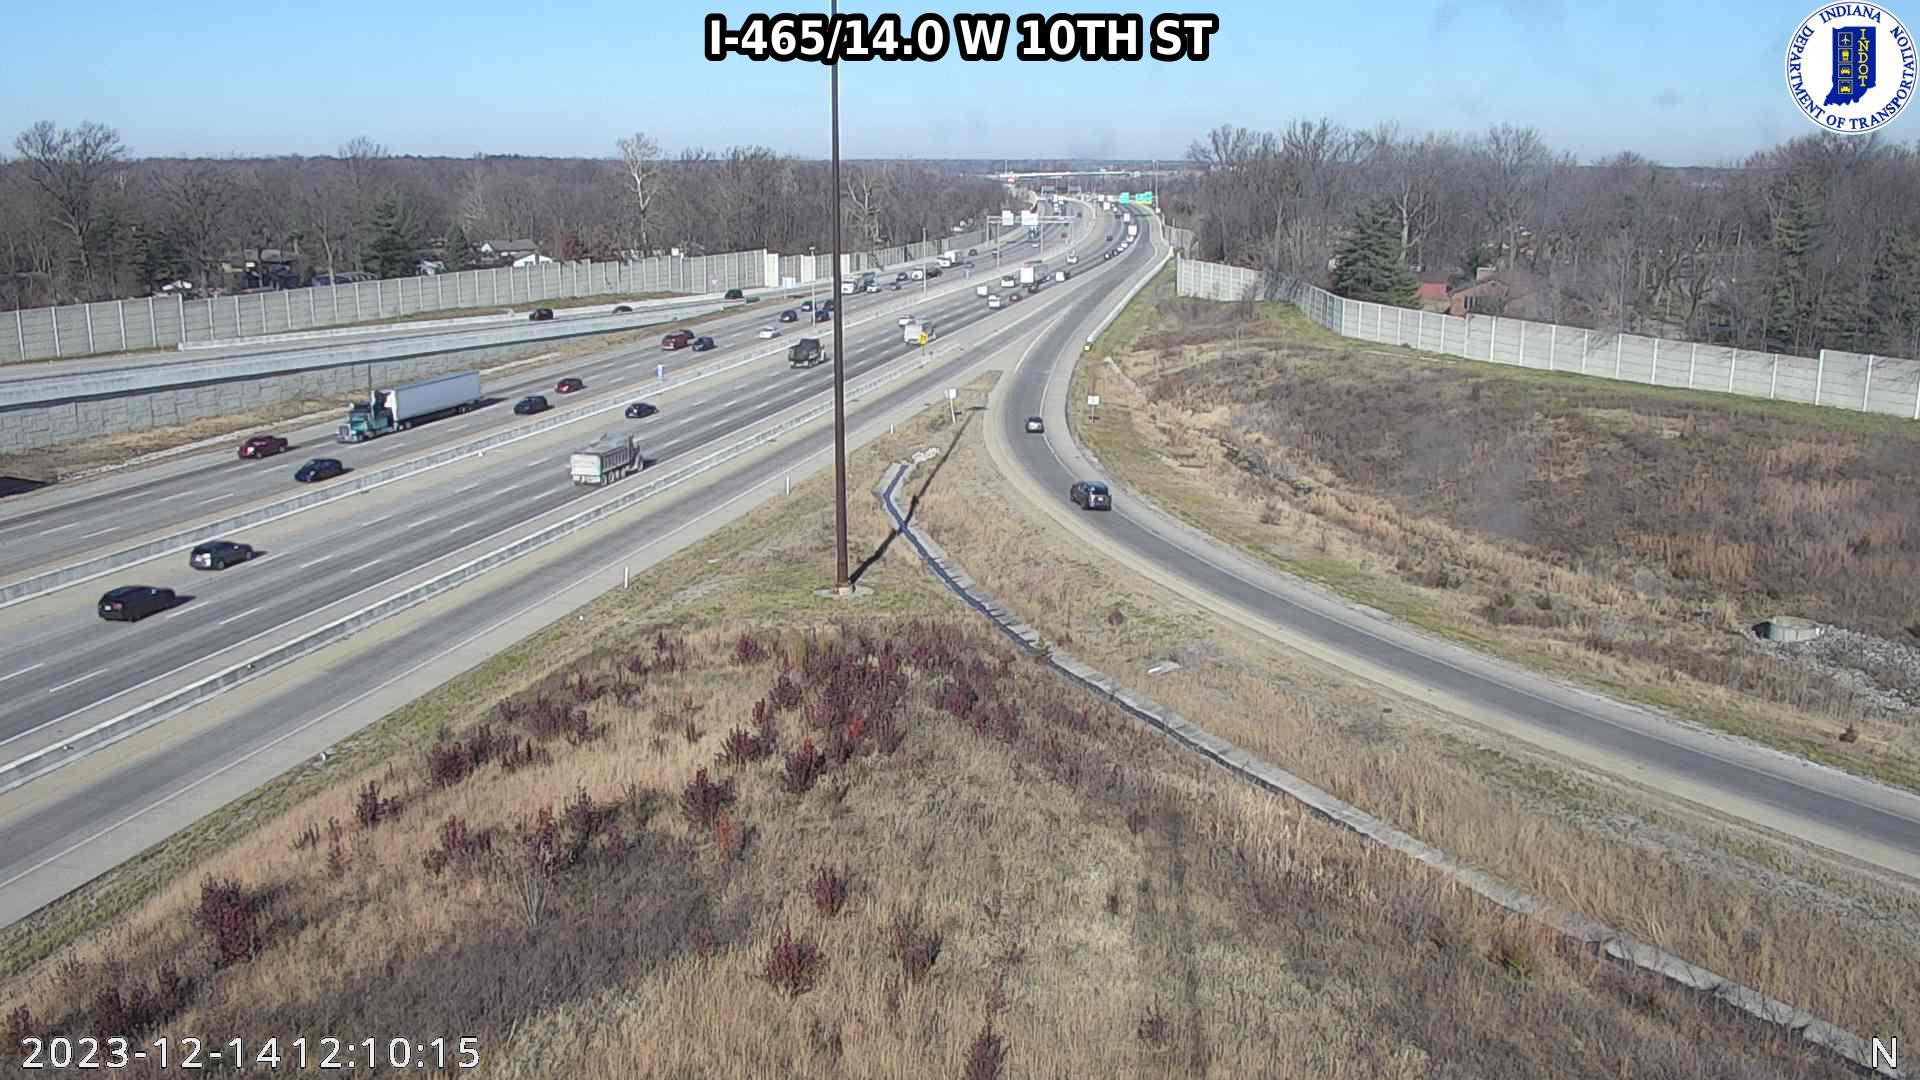 Indianapolis: I-465: I-465/14.0 W 10TH ST Traffic Camera